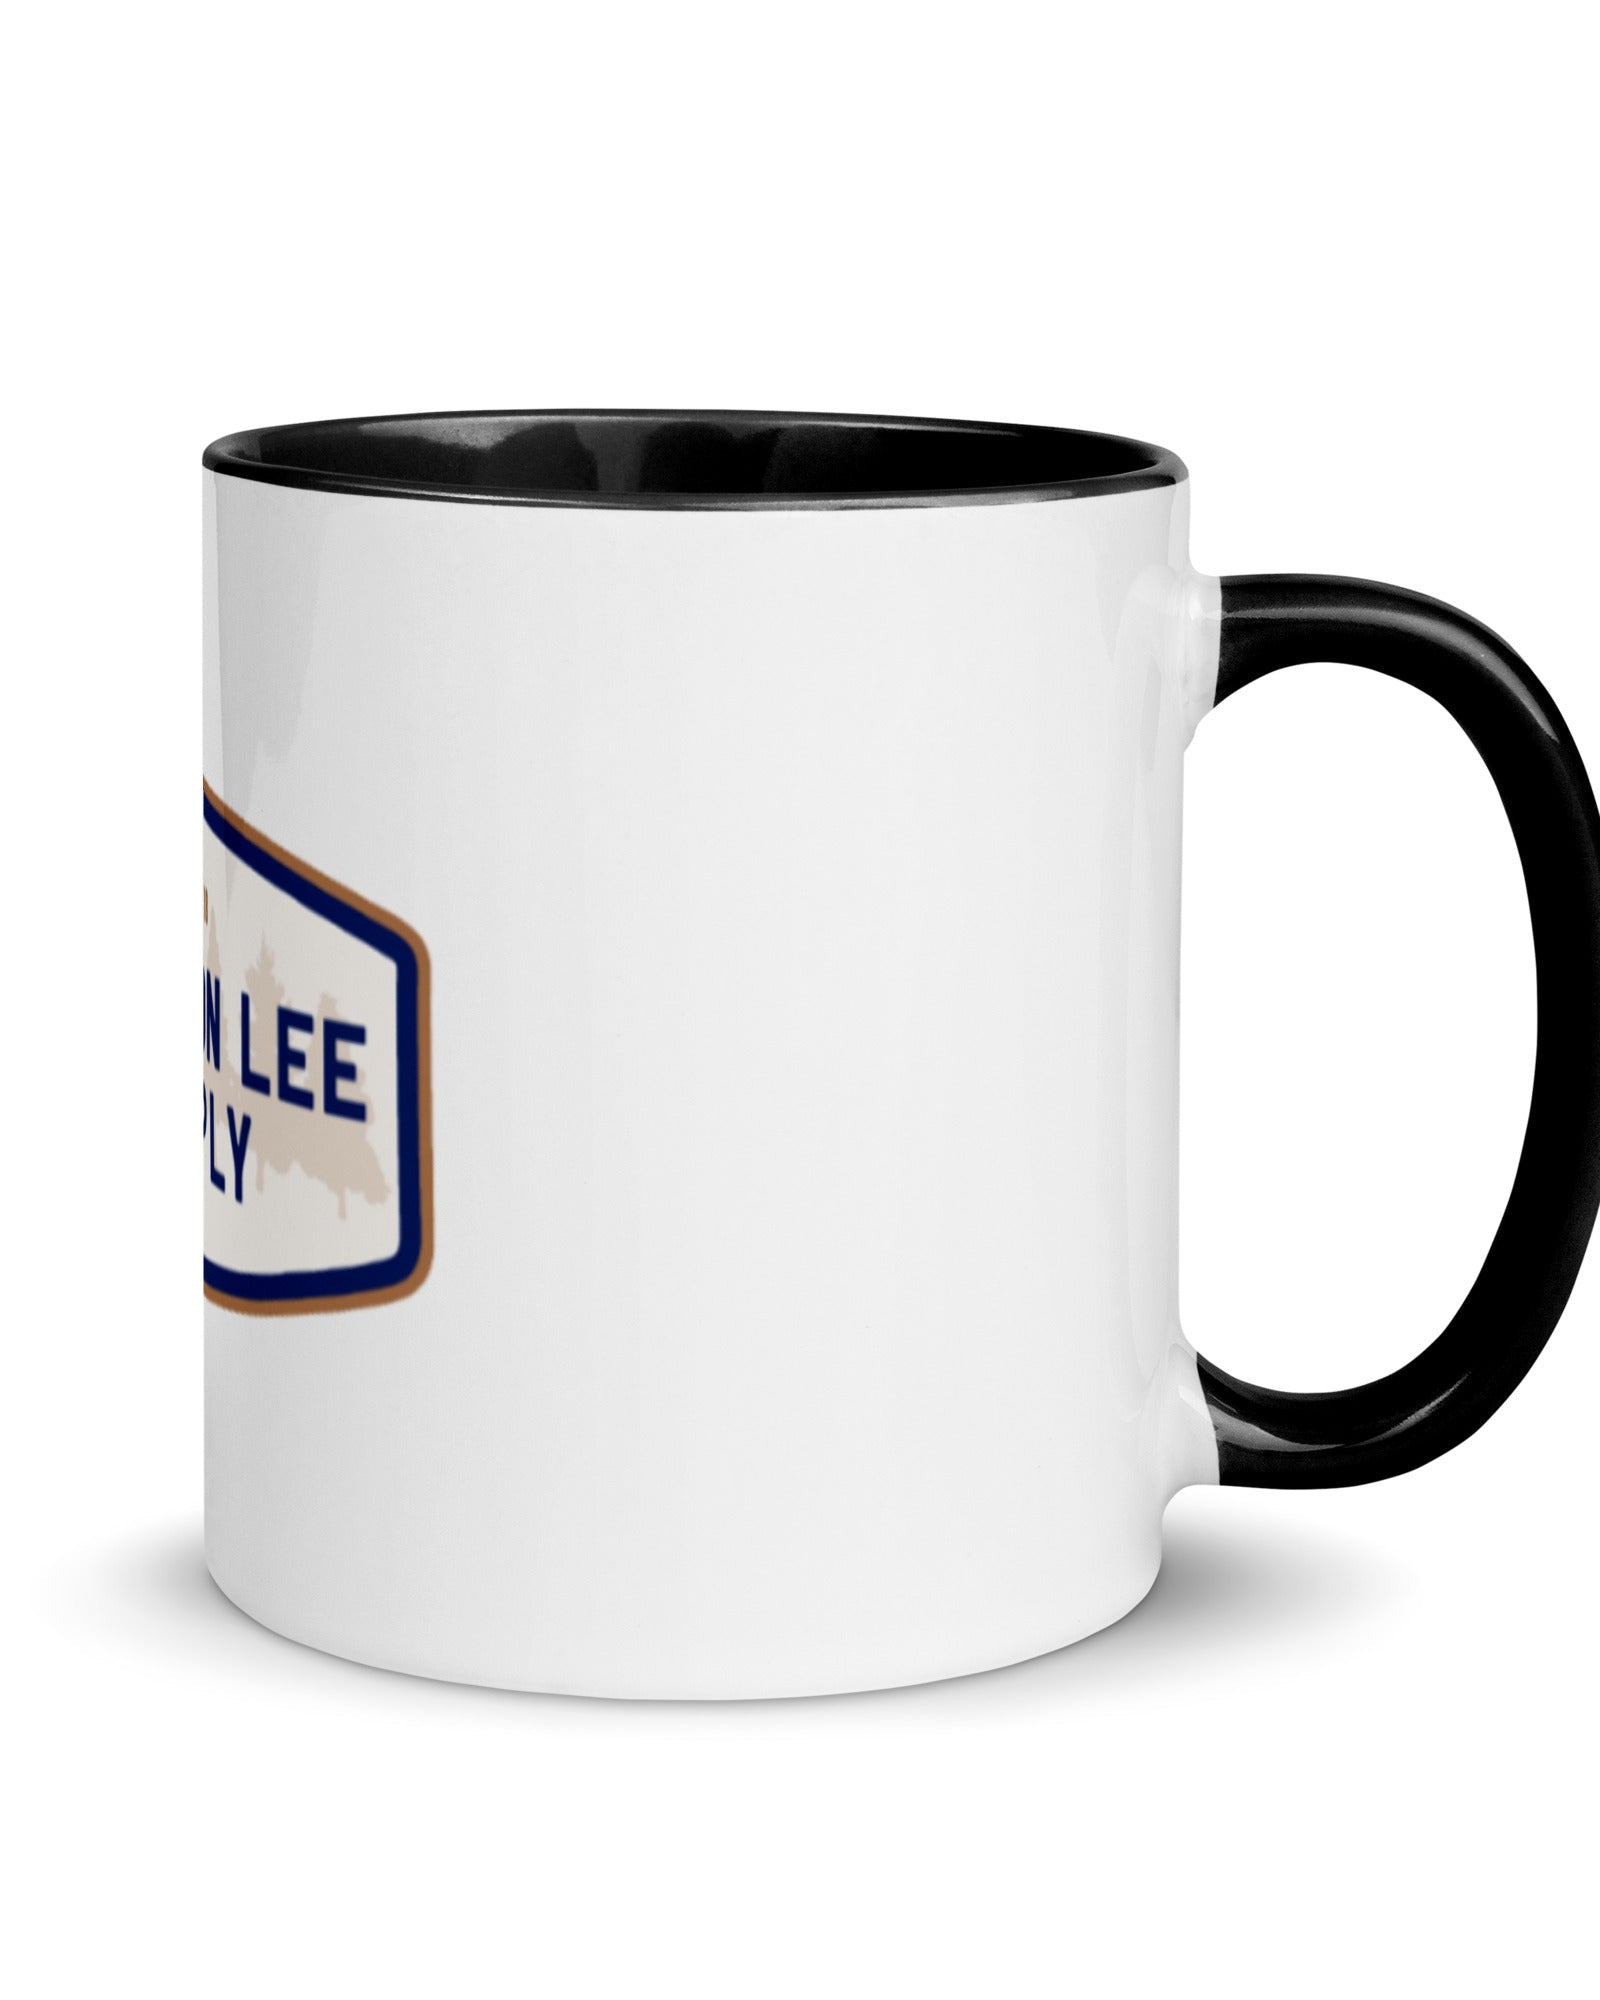 Hamilton Lee Supply | Coffee Mug with Color Inside | Ceramic Coffee Mug | Hamilton Lee Supply